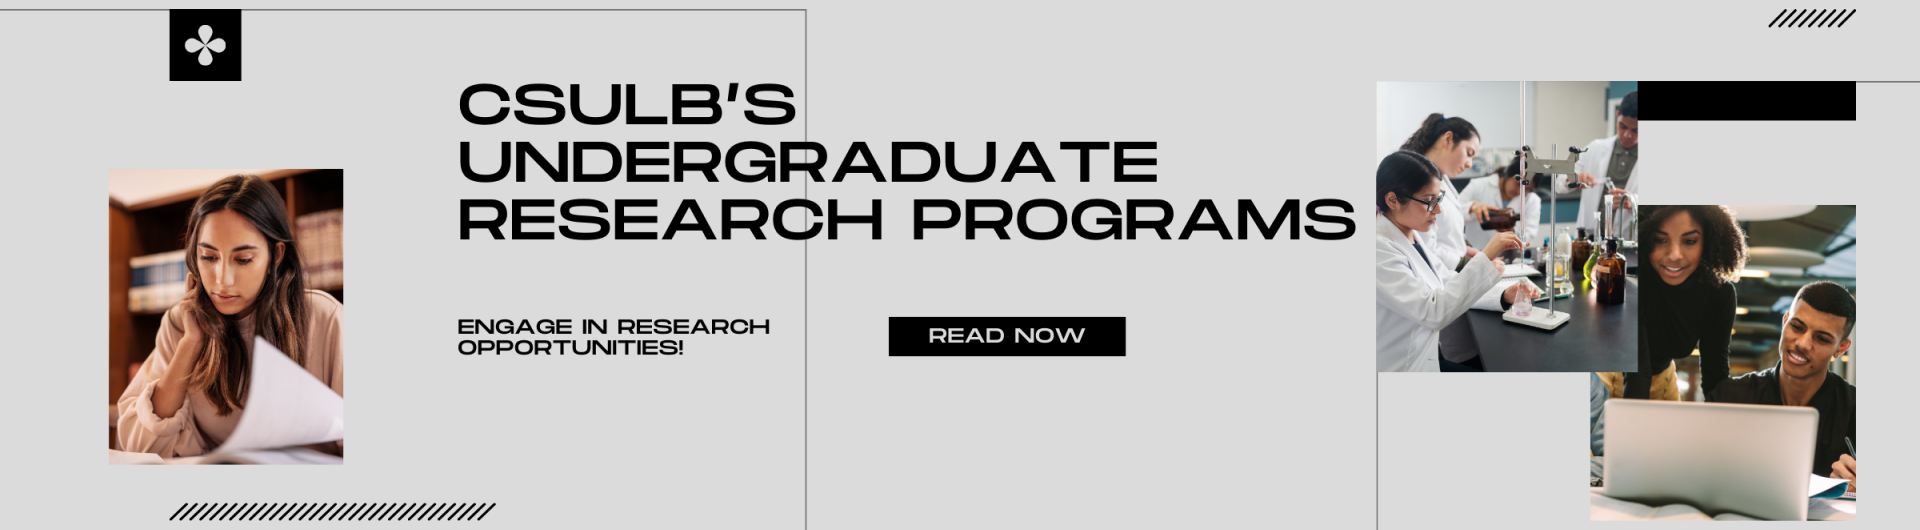 CSULB Undergraduate Research Program Banner